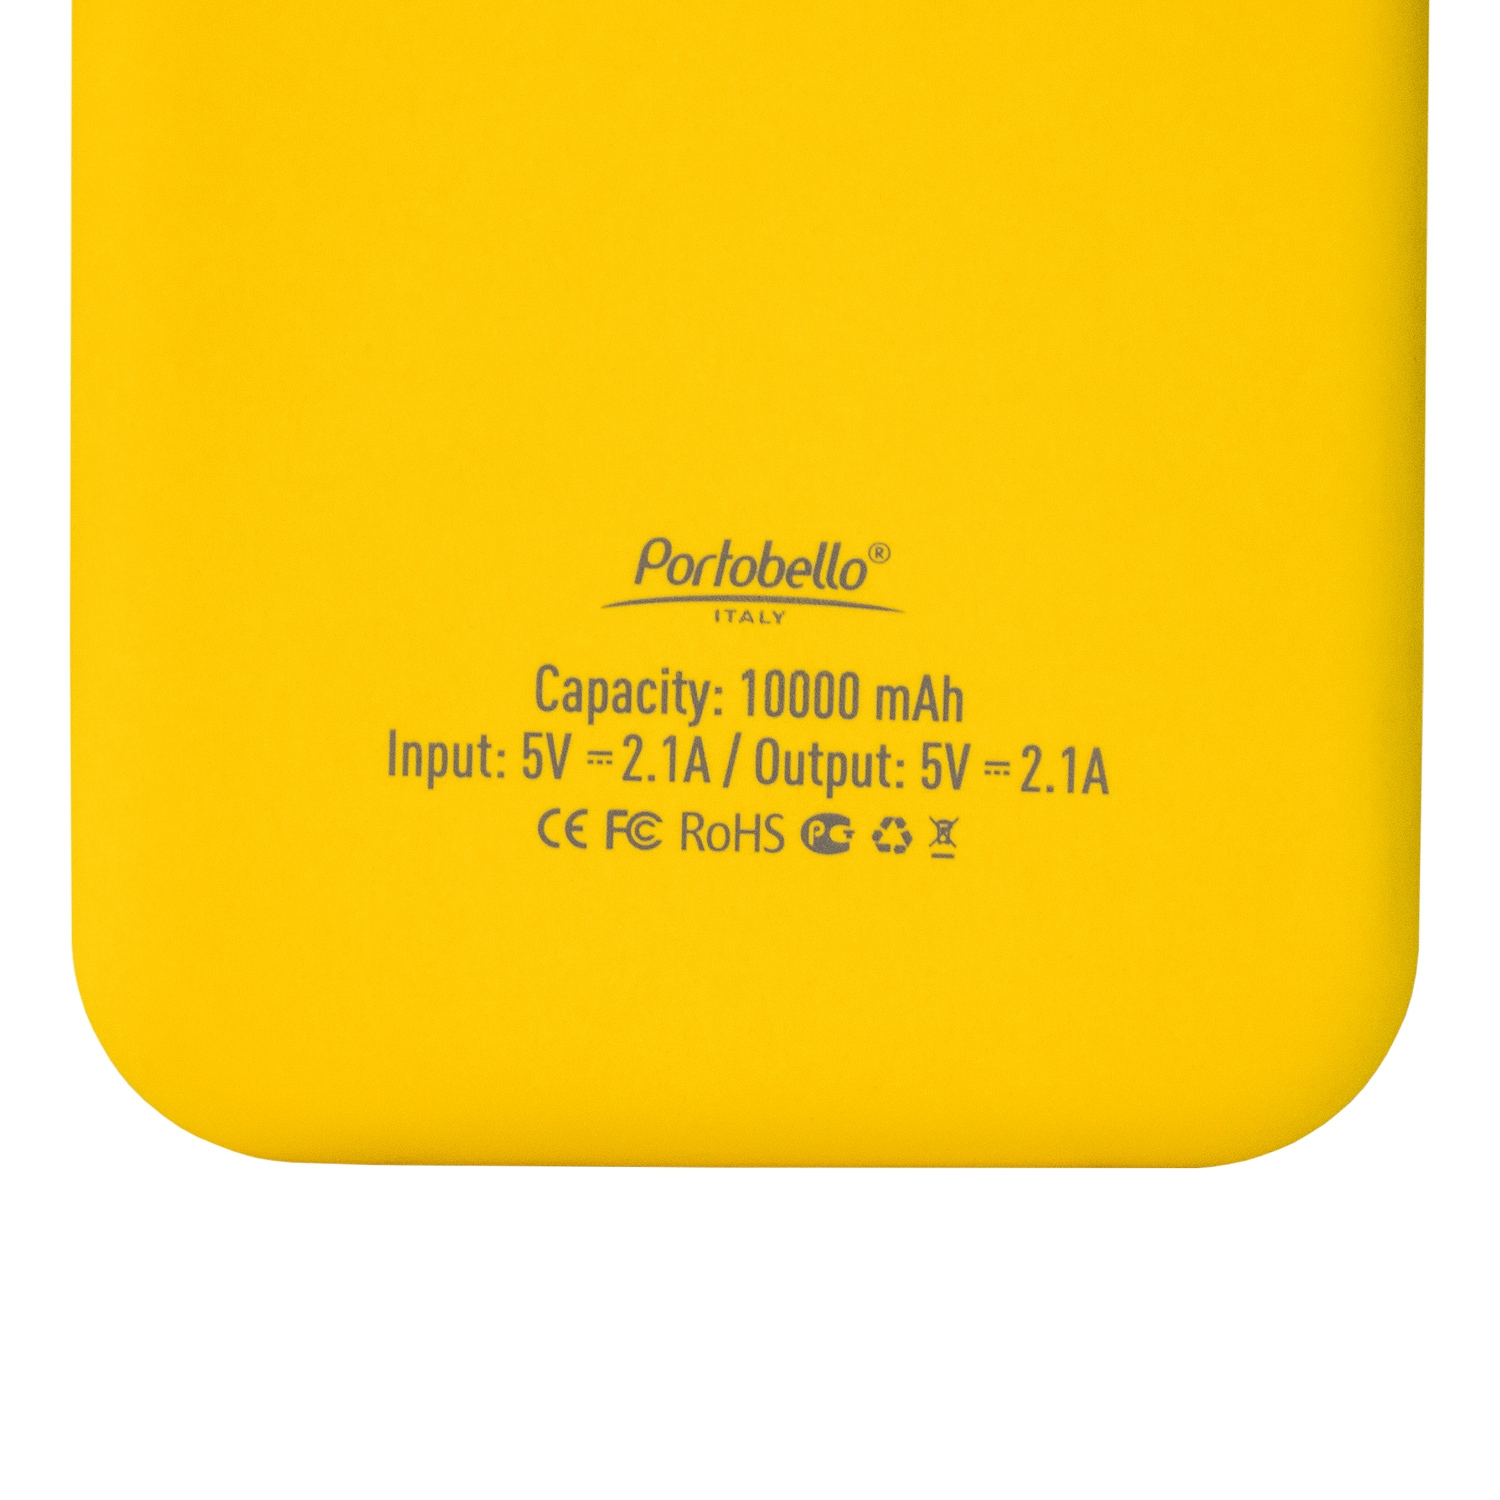 Внешний аккумулятор с подсветкой Luce Lemoni 10000 mAh, желтый, желтый